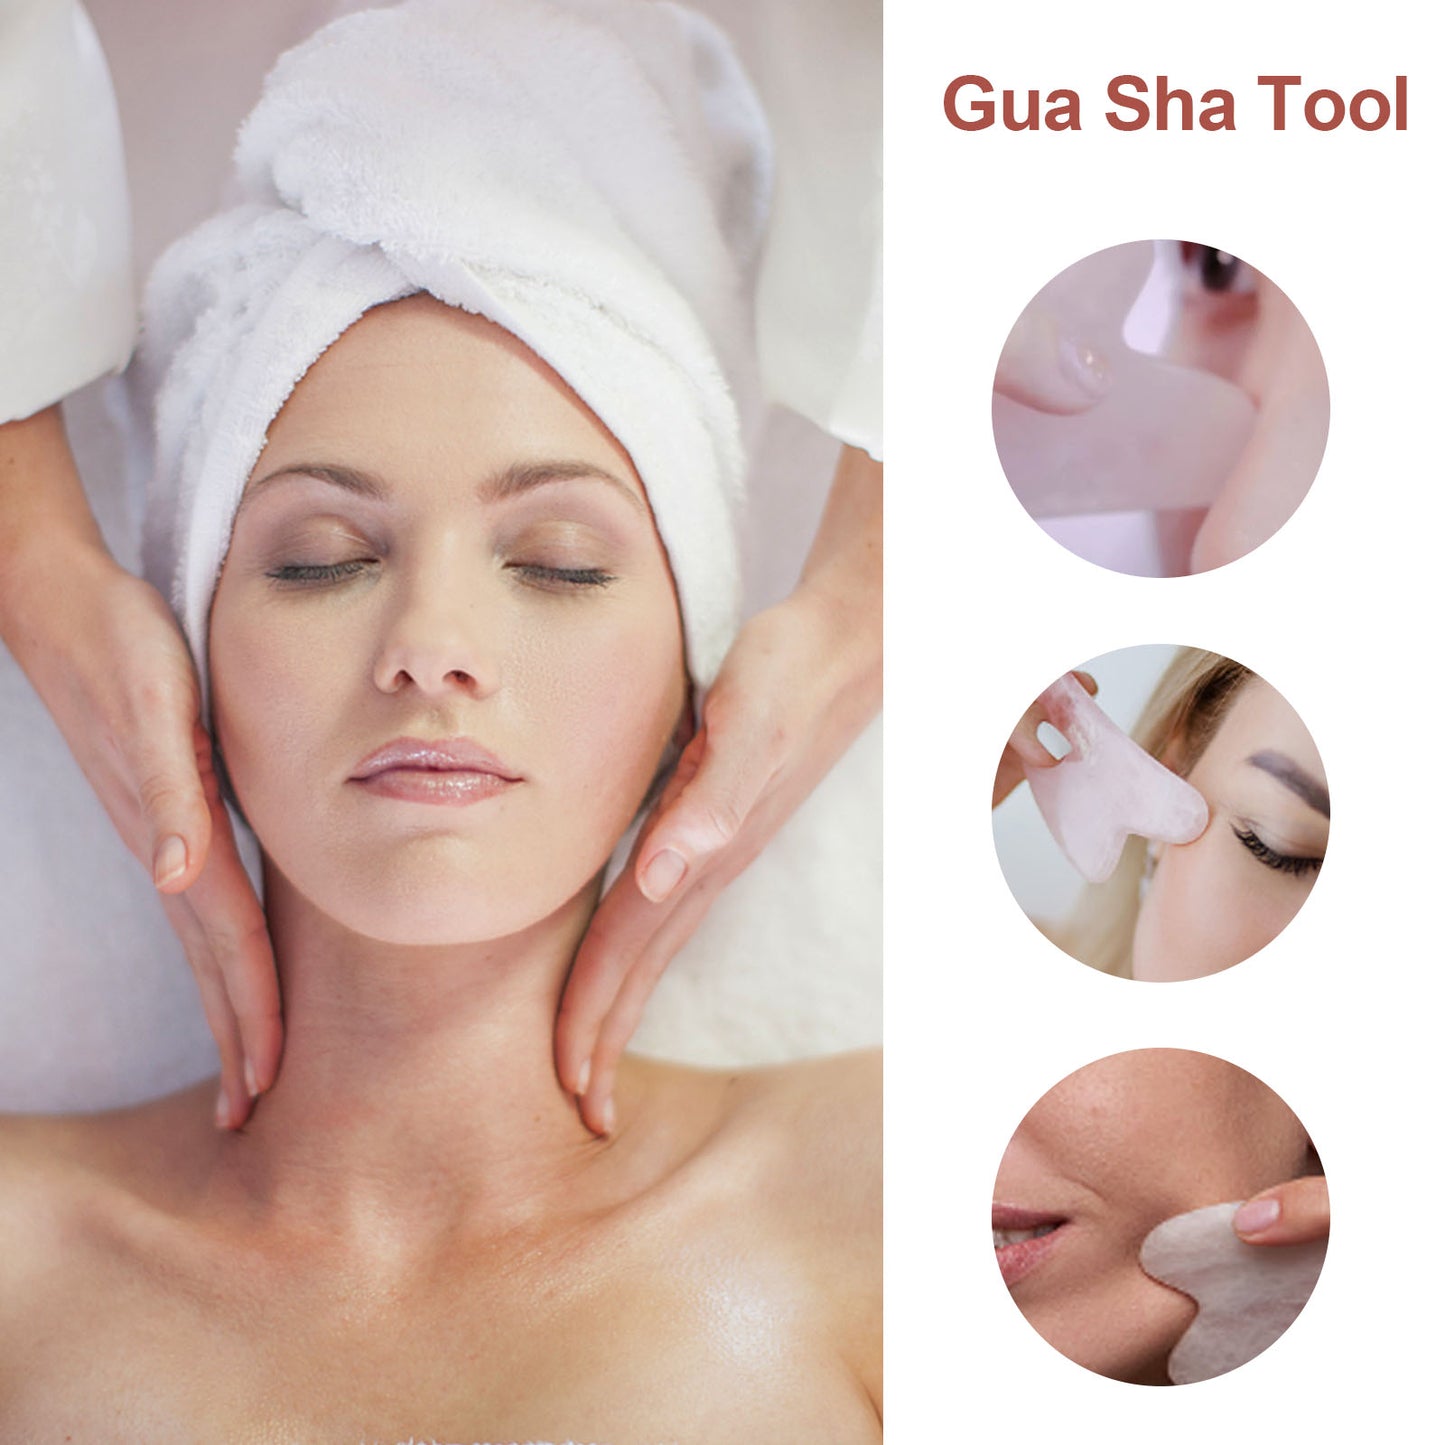 ideayard 2PCS Gua Sha Tool,11 Natural Jade Gua Sha Stone Scraping Board Facial Tool for SPA Acupuncture Point Treatment